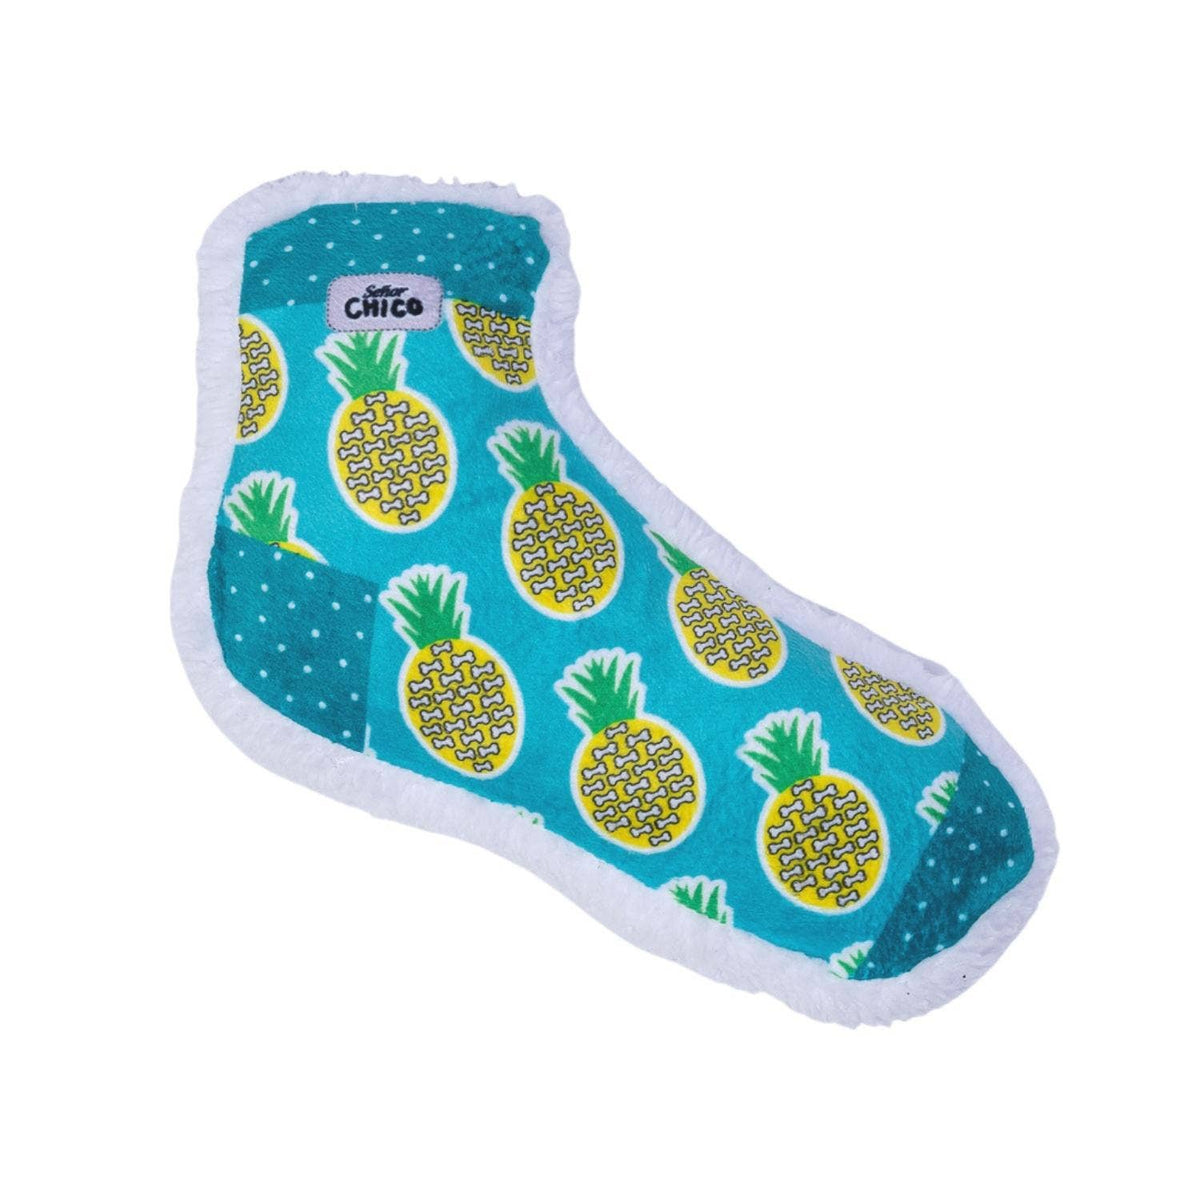 Squeaking Pineapple Comfort Plush Sock Dog Toy